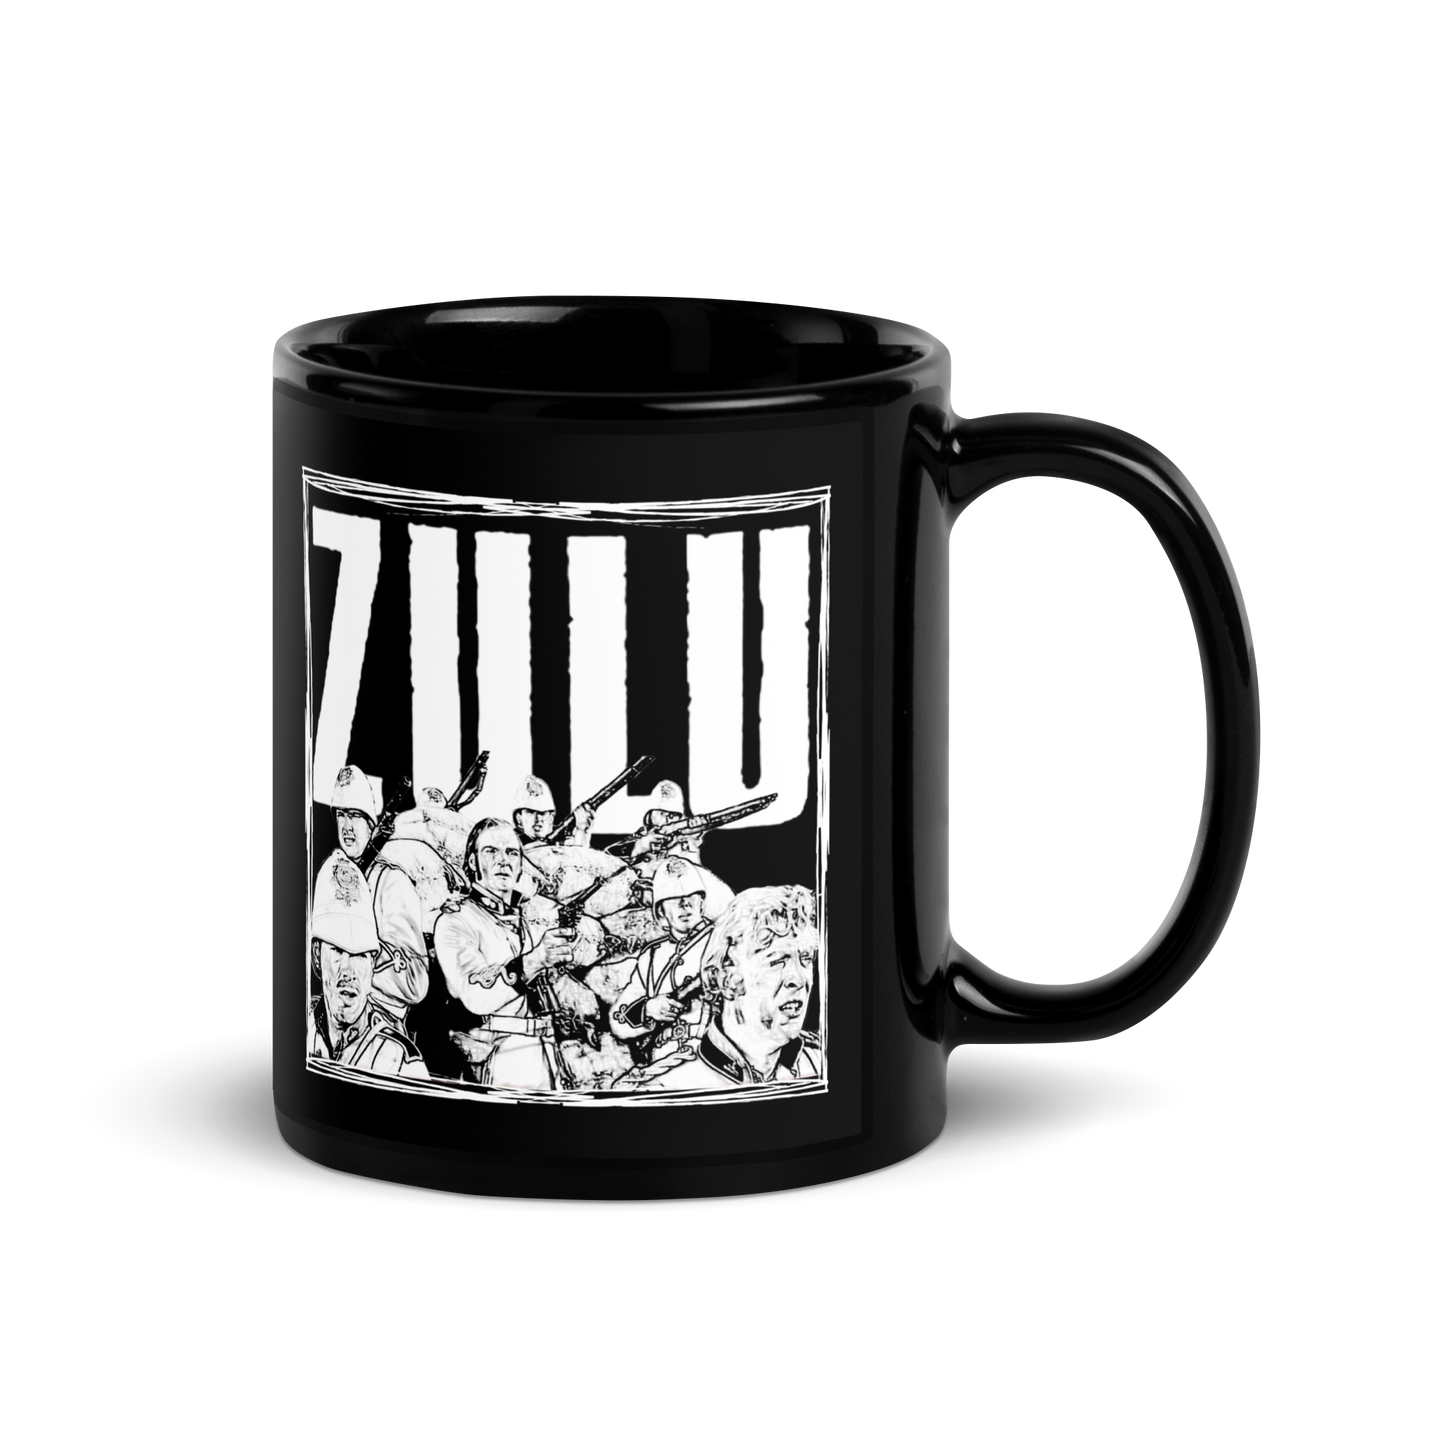 ZULU Final Stand Sketch (Black Mug)